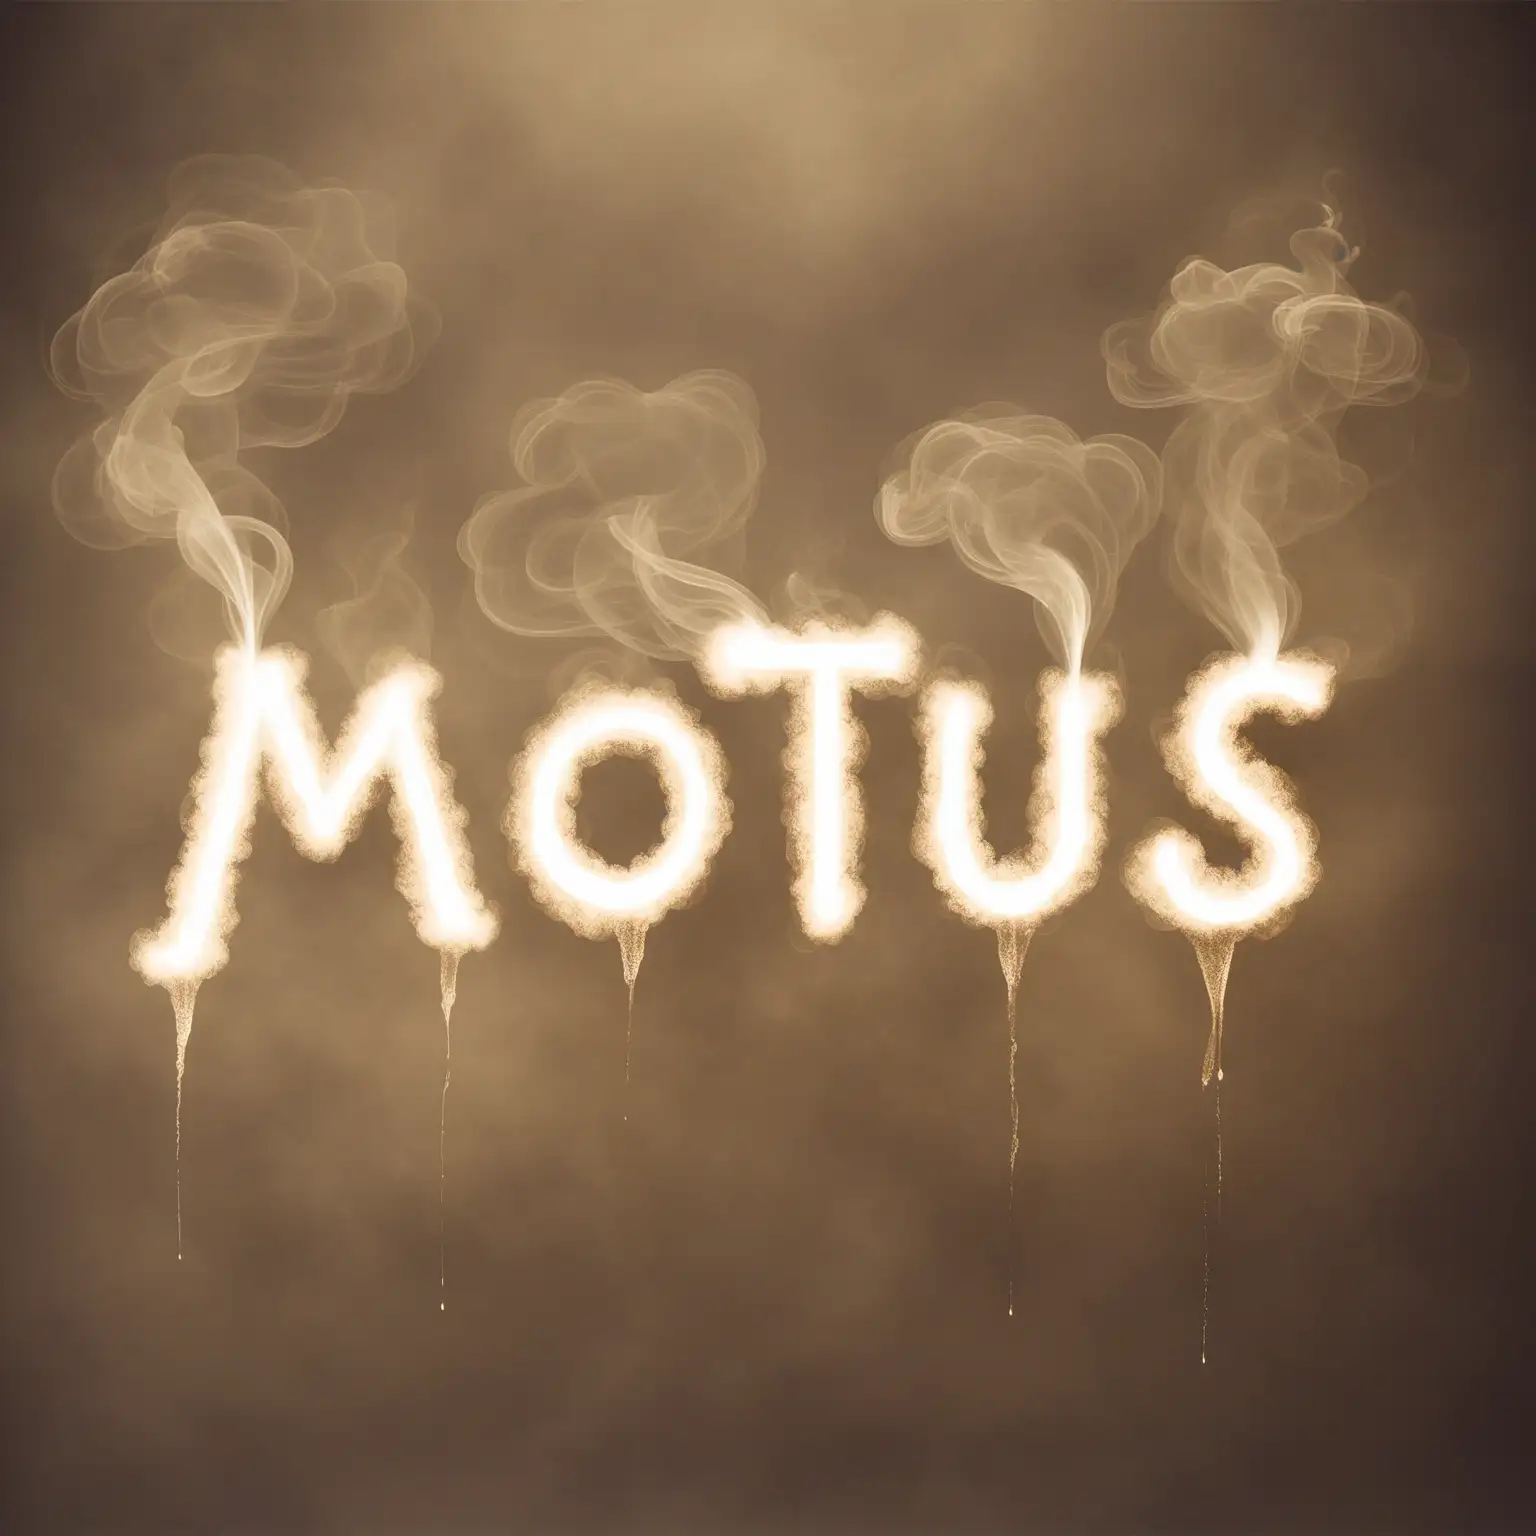 Dynamic MOTUS Text Written in Ethereal Smoke